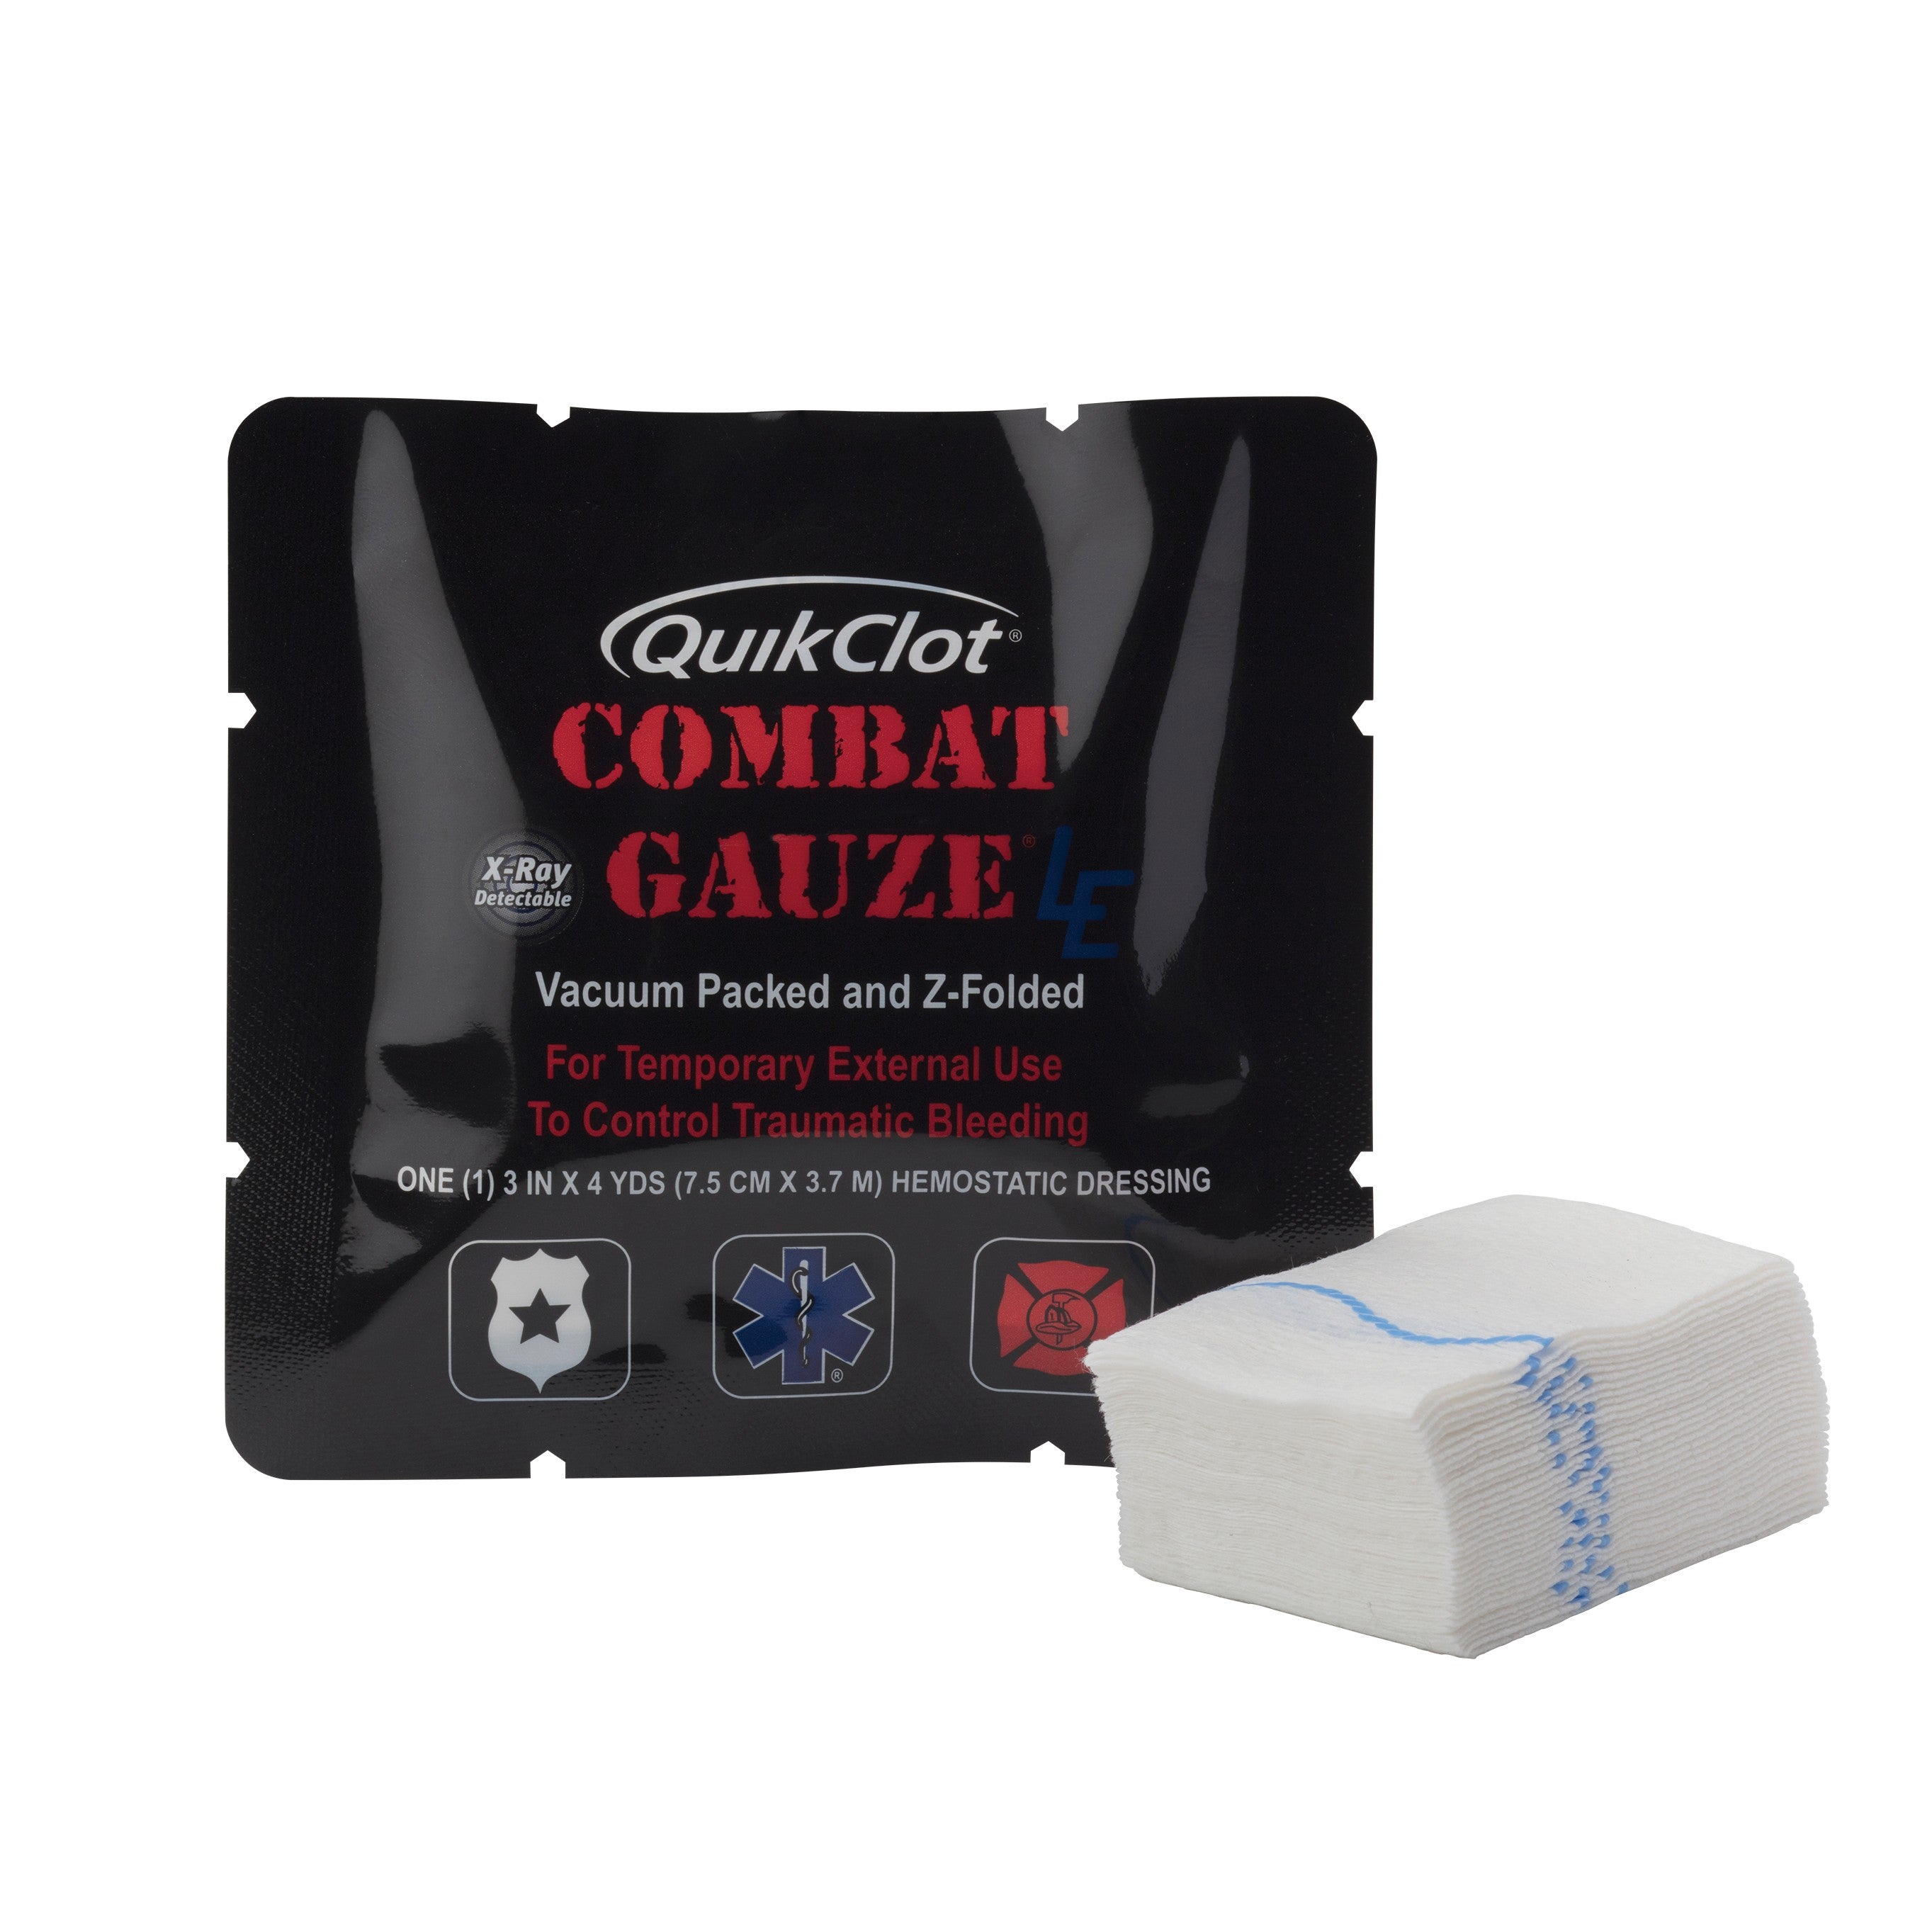 Z-Medica Hemorrhage Control Training Kit (with QuikClot Combat Gauze LE)